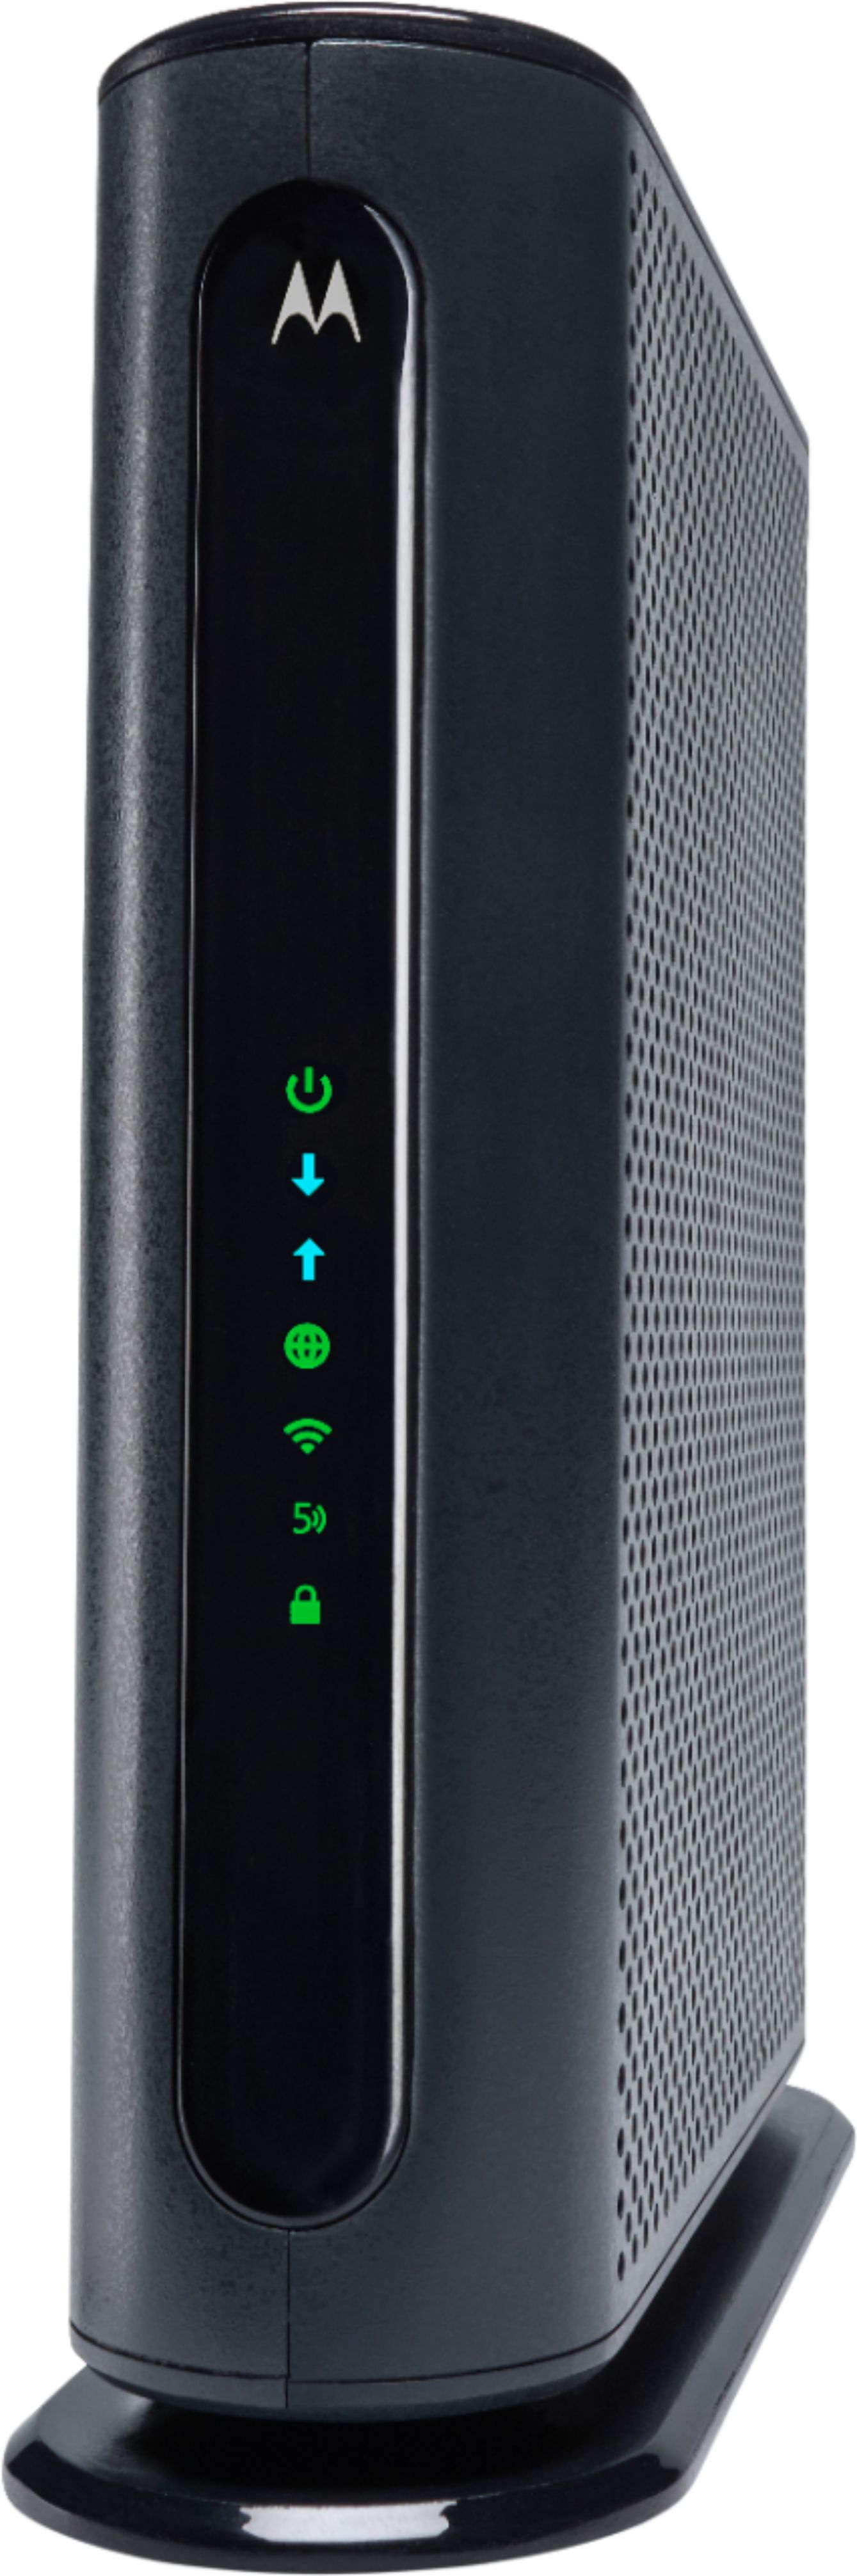 Motorola Dual-Band Wi-Fi with 16 4 Modem Black MG7540 - Best Buy